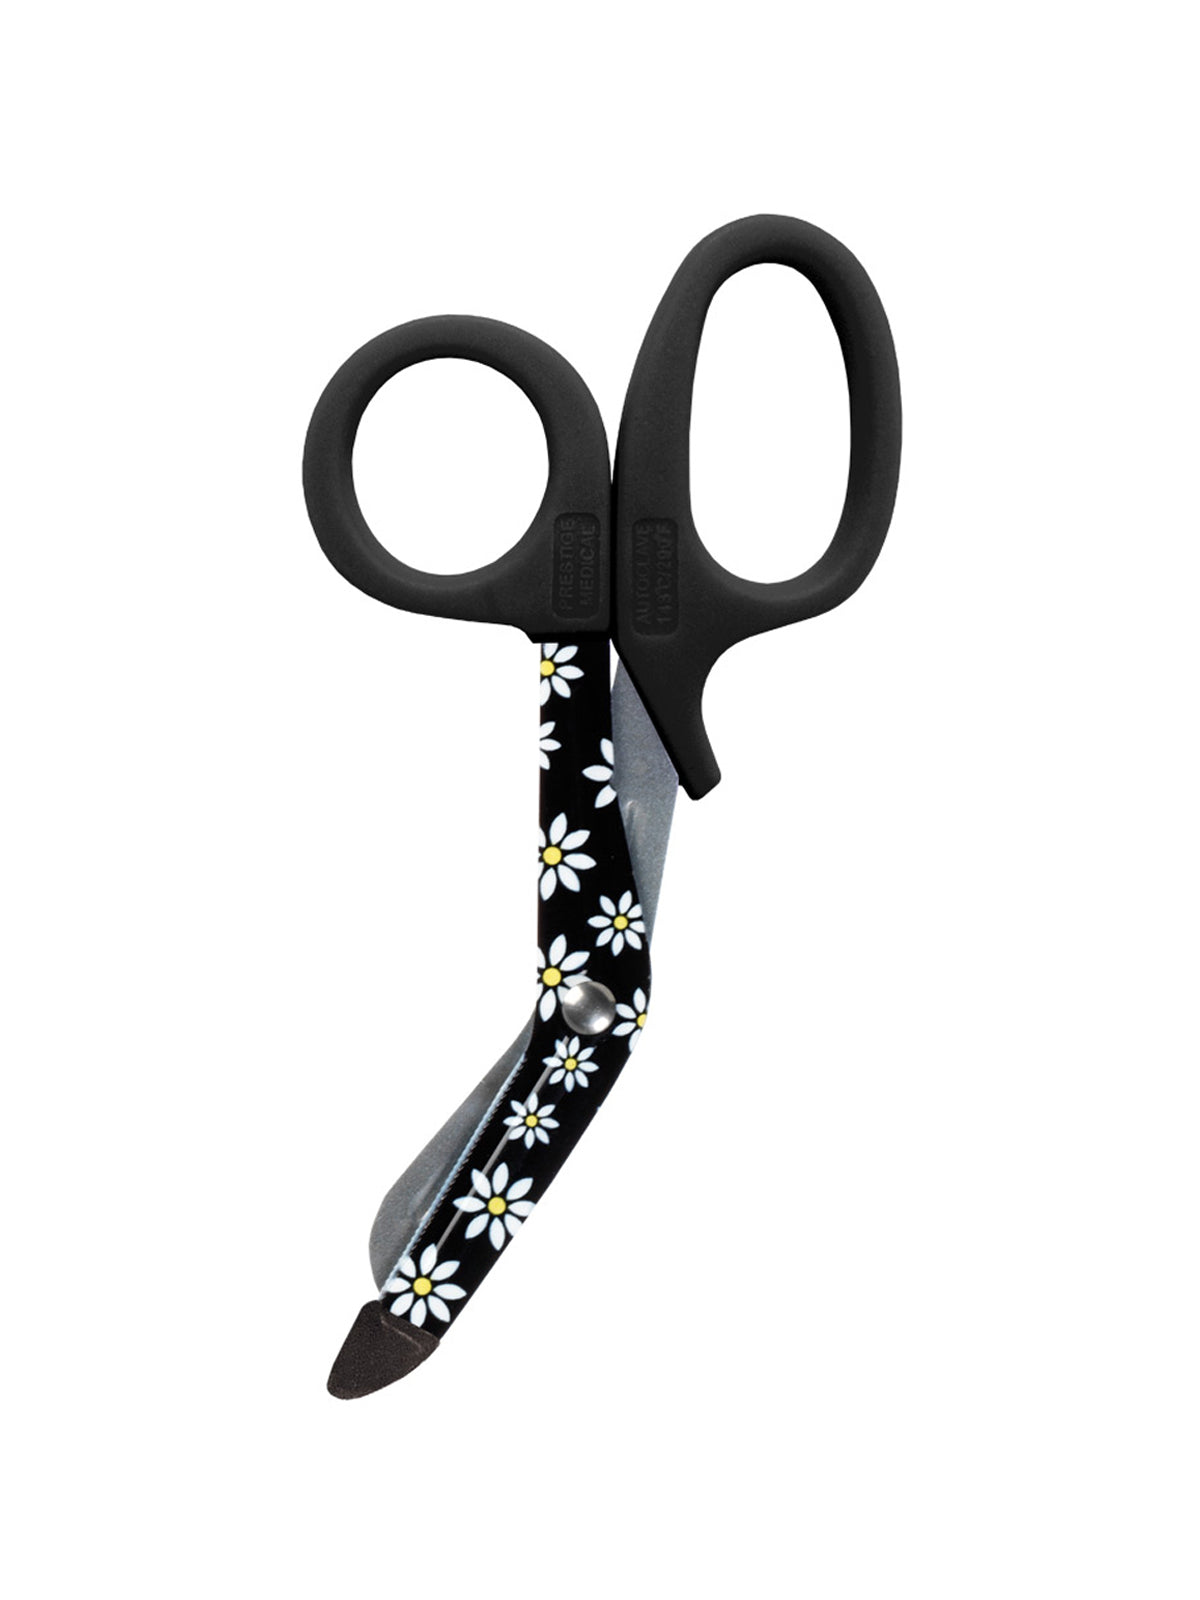 5.5" StyleMate Utility Scissor - 871 - Daisy